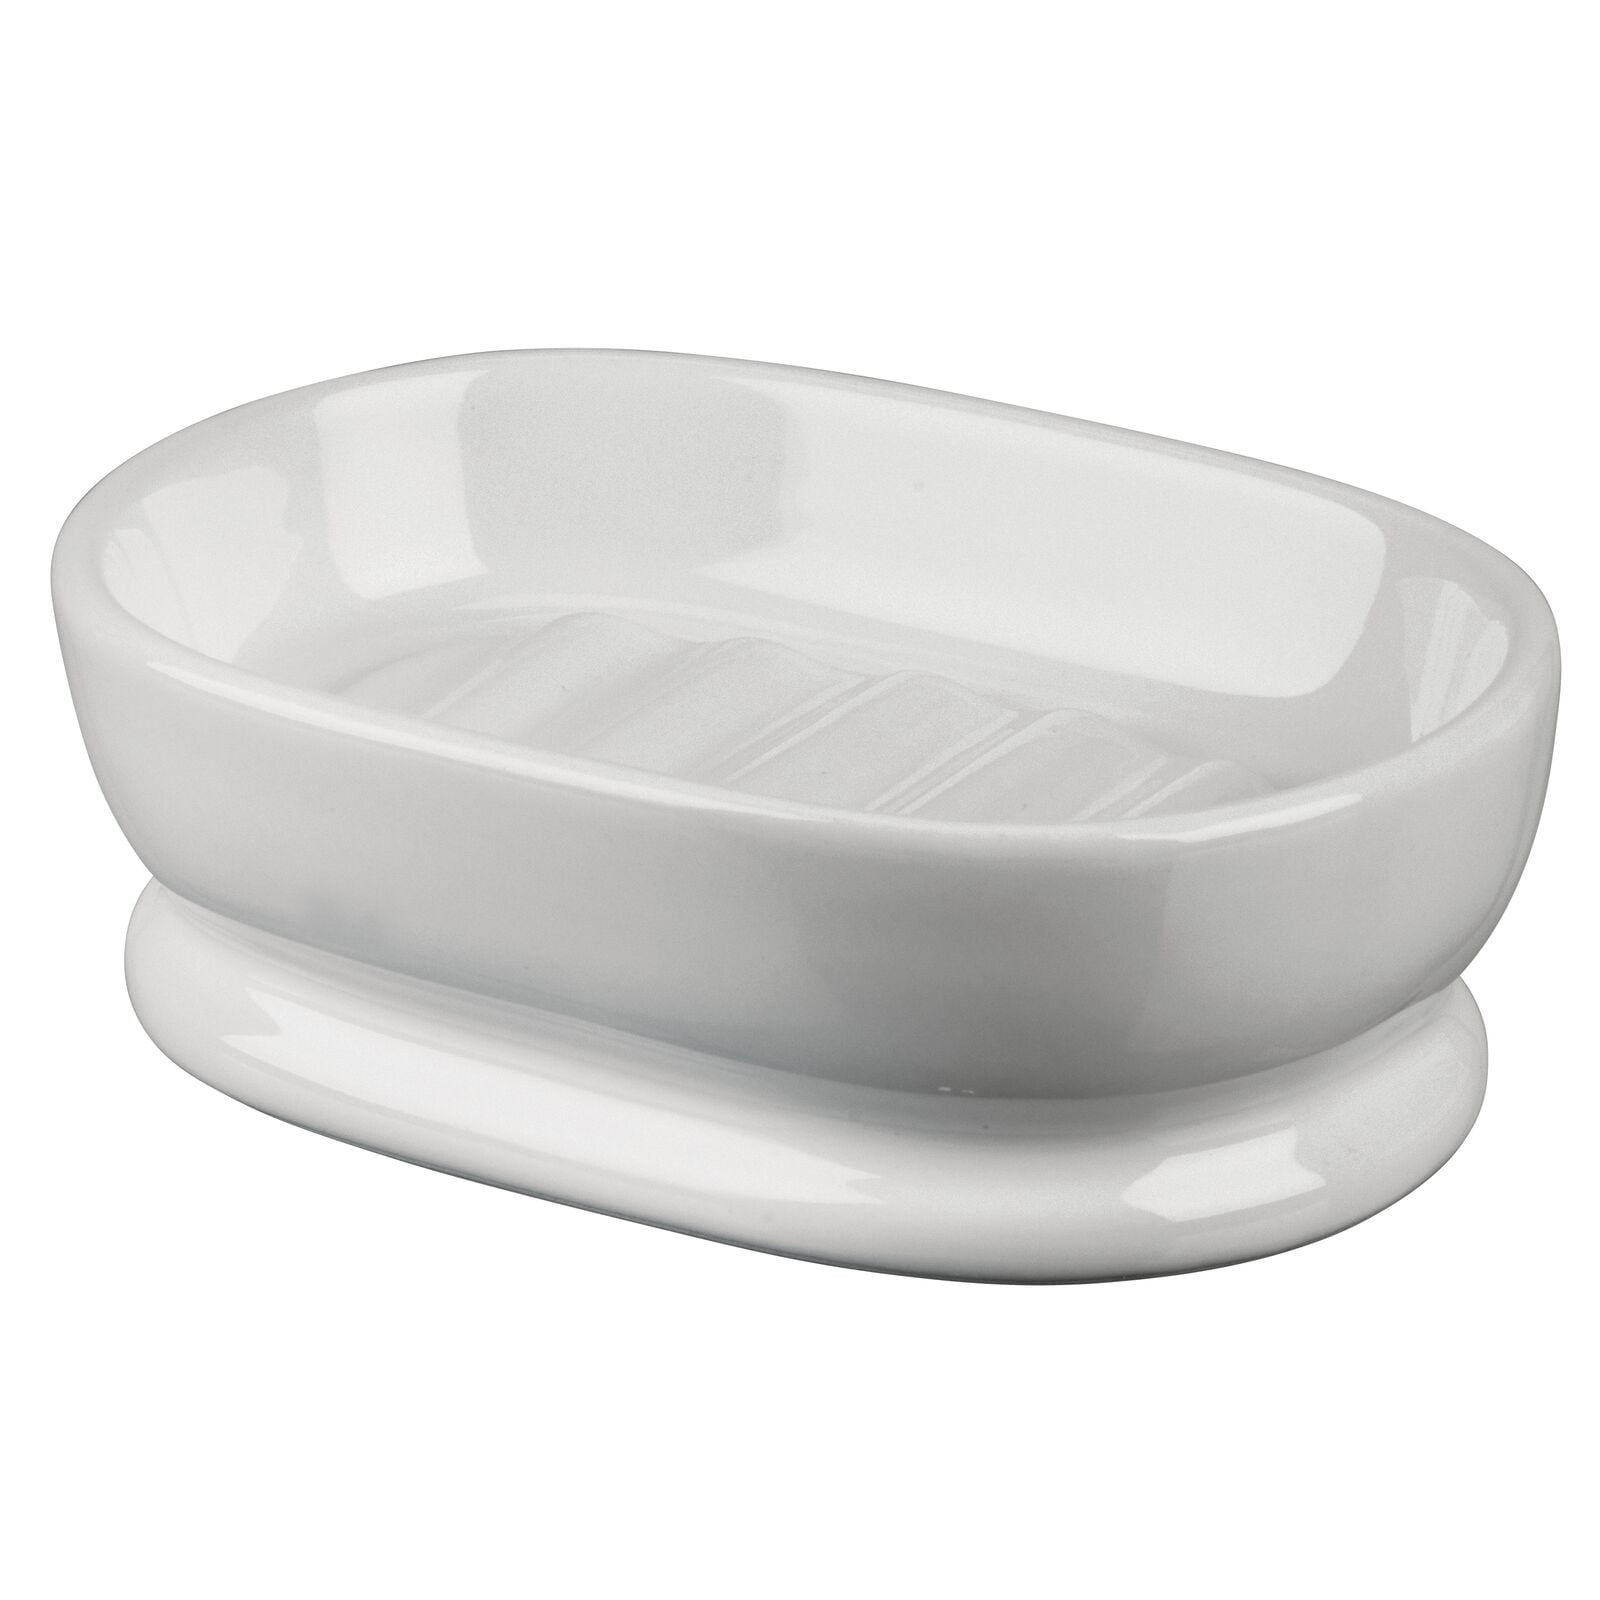 Bathroom Hotel Hole Soap Dish Holder Shower Storage Tray Case Container Non-slip 